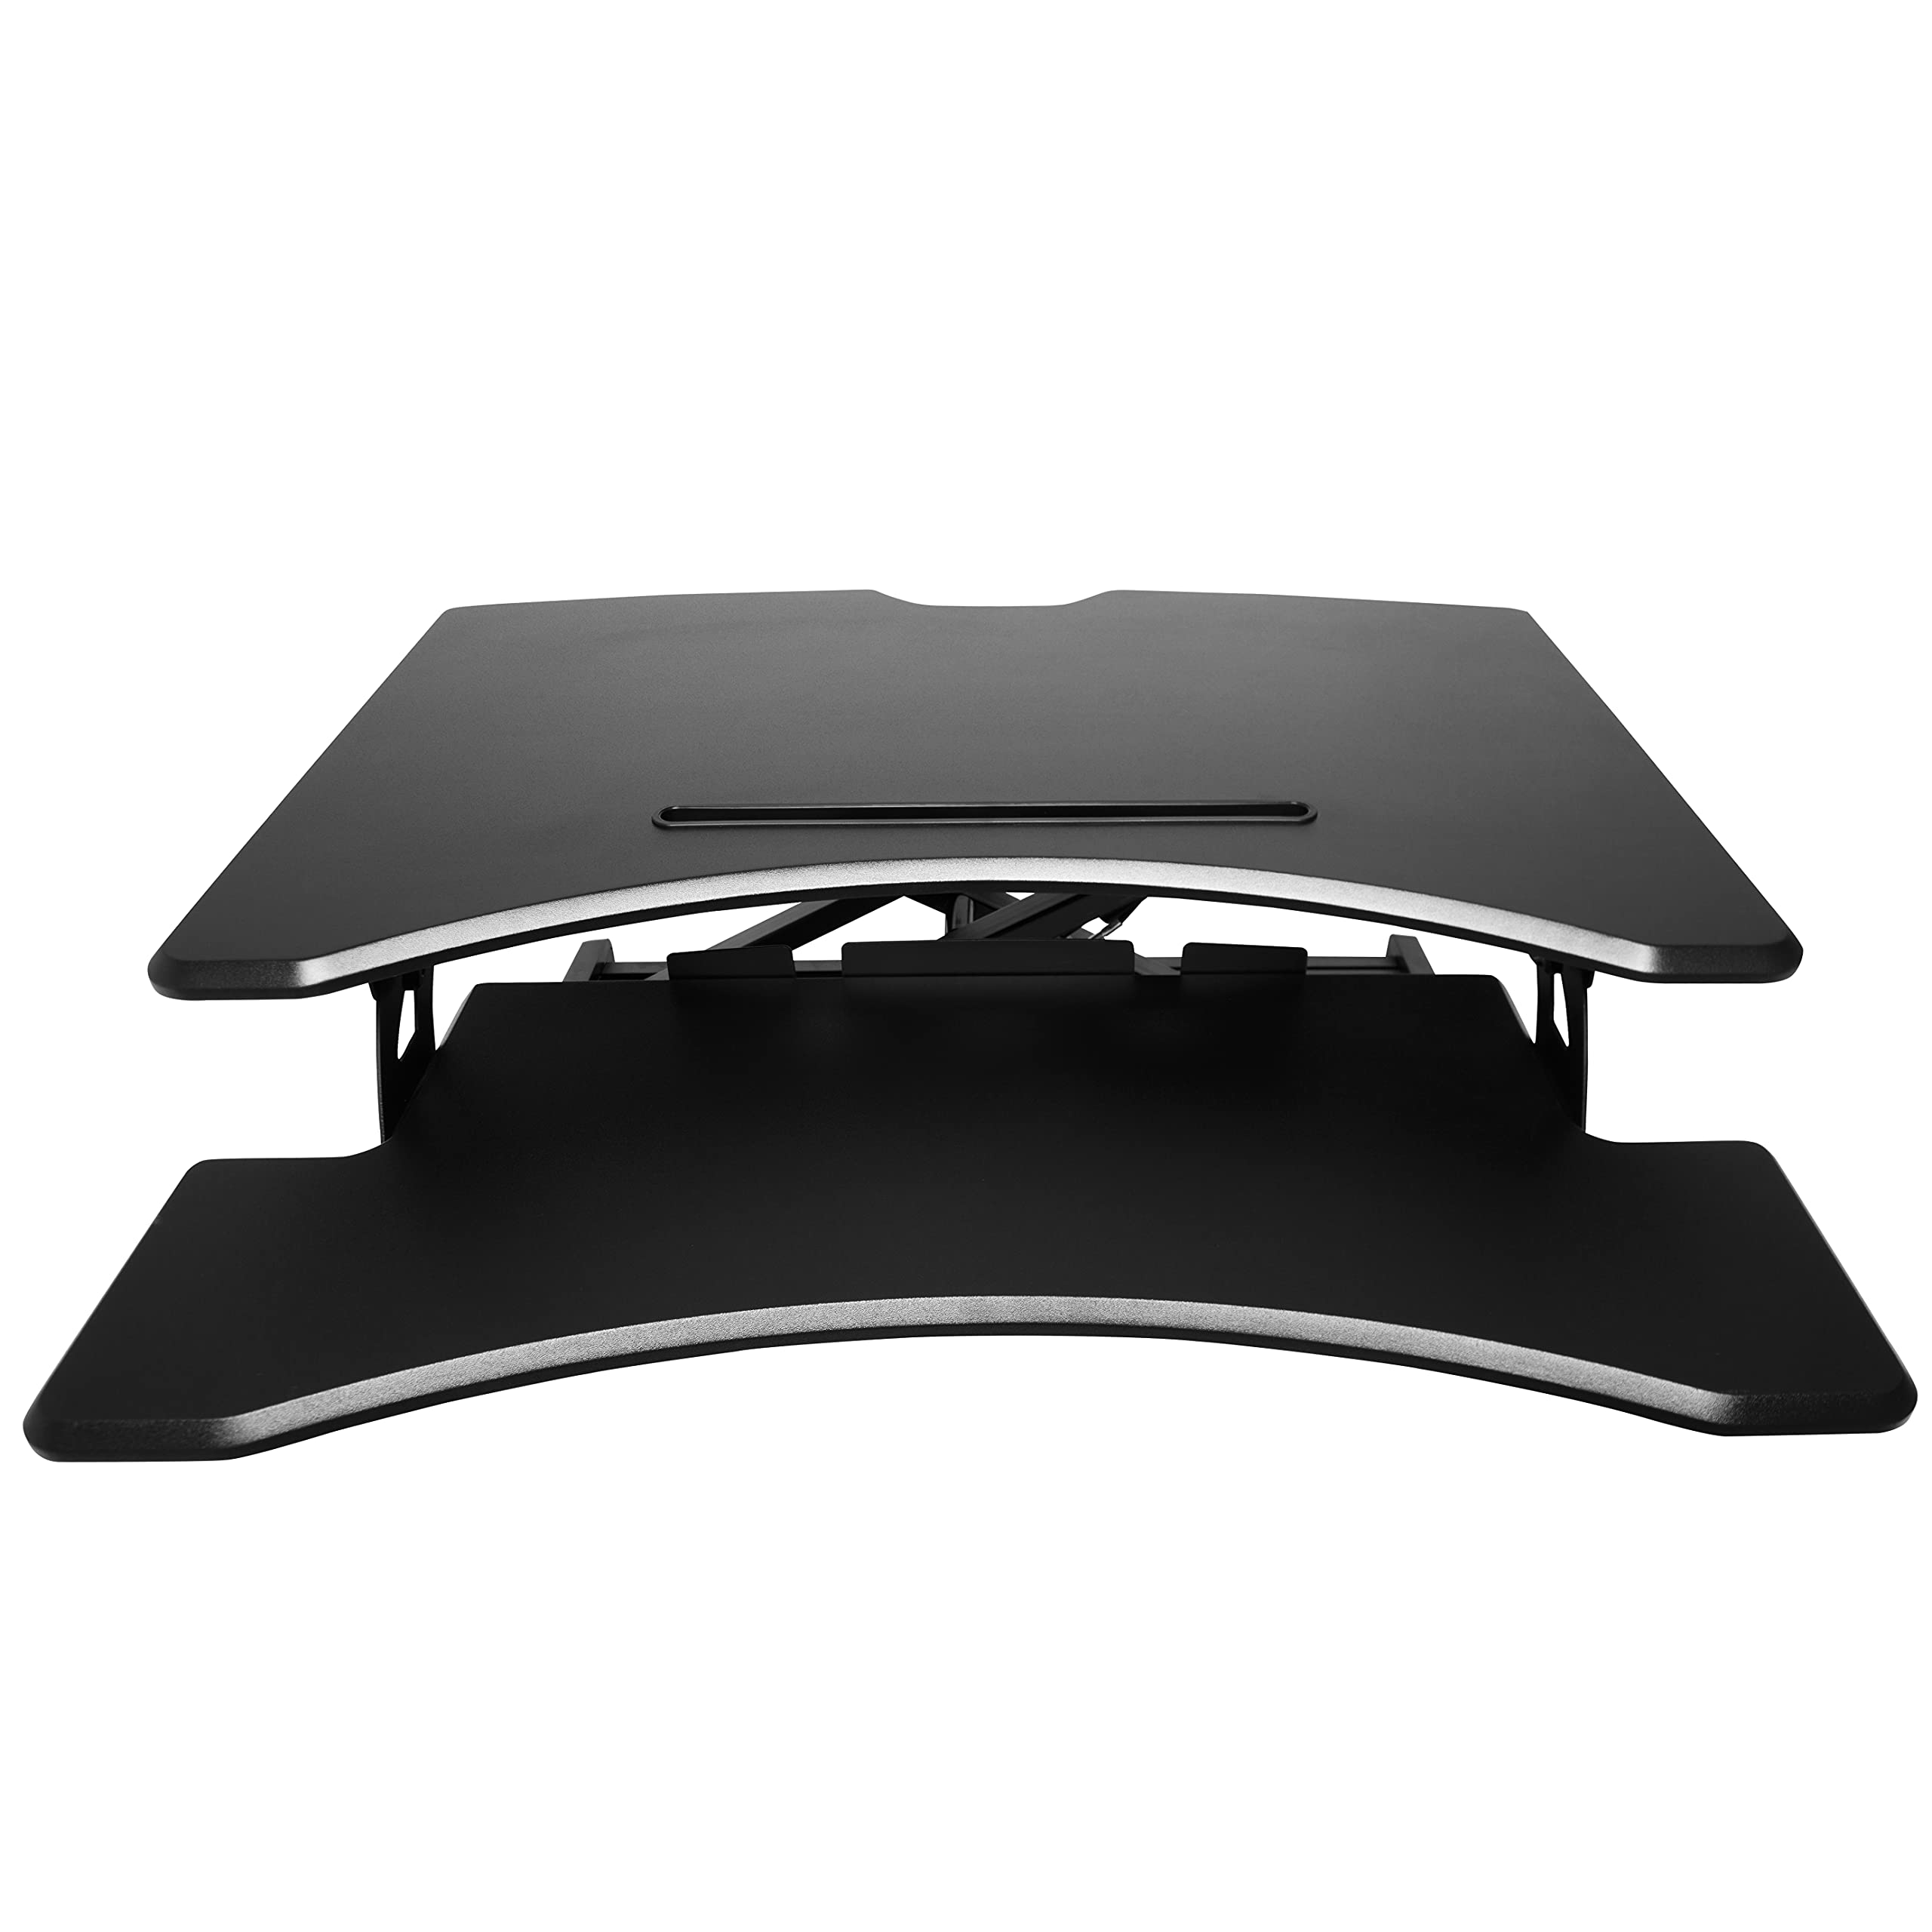 Duronic Sit-Stand Desk DM05D16 | Height Adjustable Office Workstation | 77x50cm Platform | Raises from 12-43cm | Riser for PC Computer Screen, Keyboard, Laptop | Ergonomic Desktop Table Converter